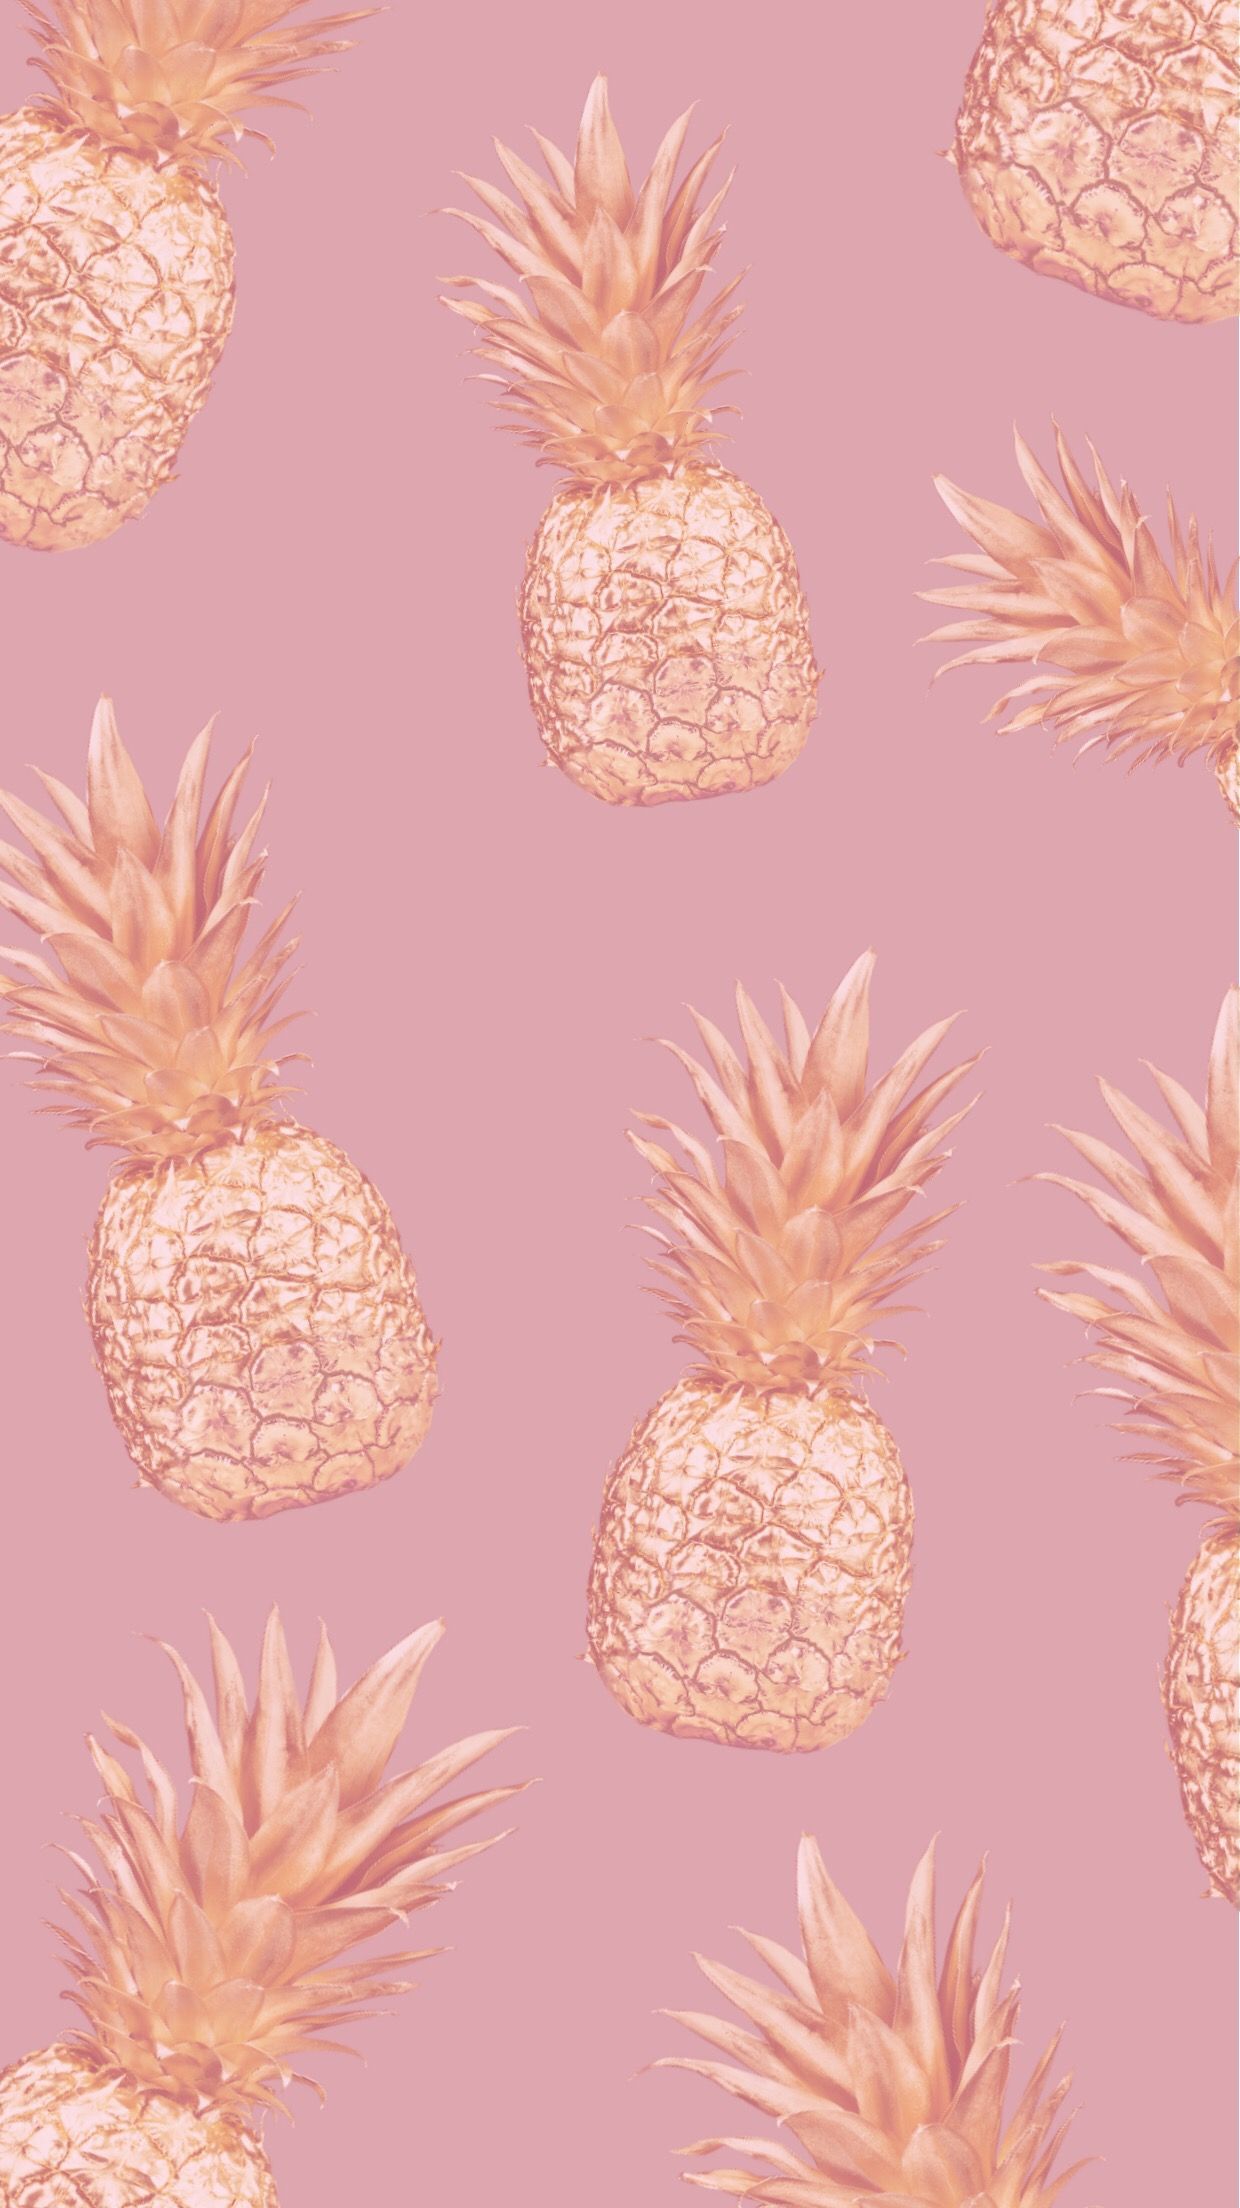 Rosegold pineapple